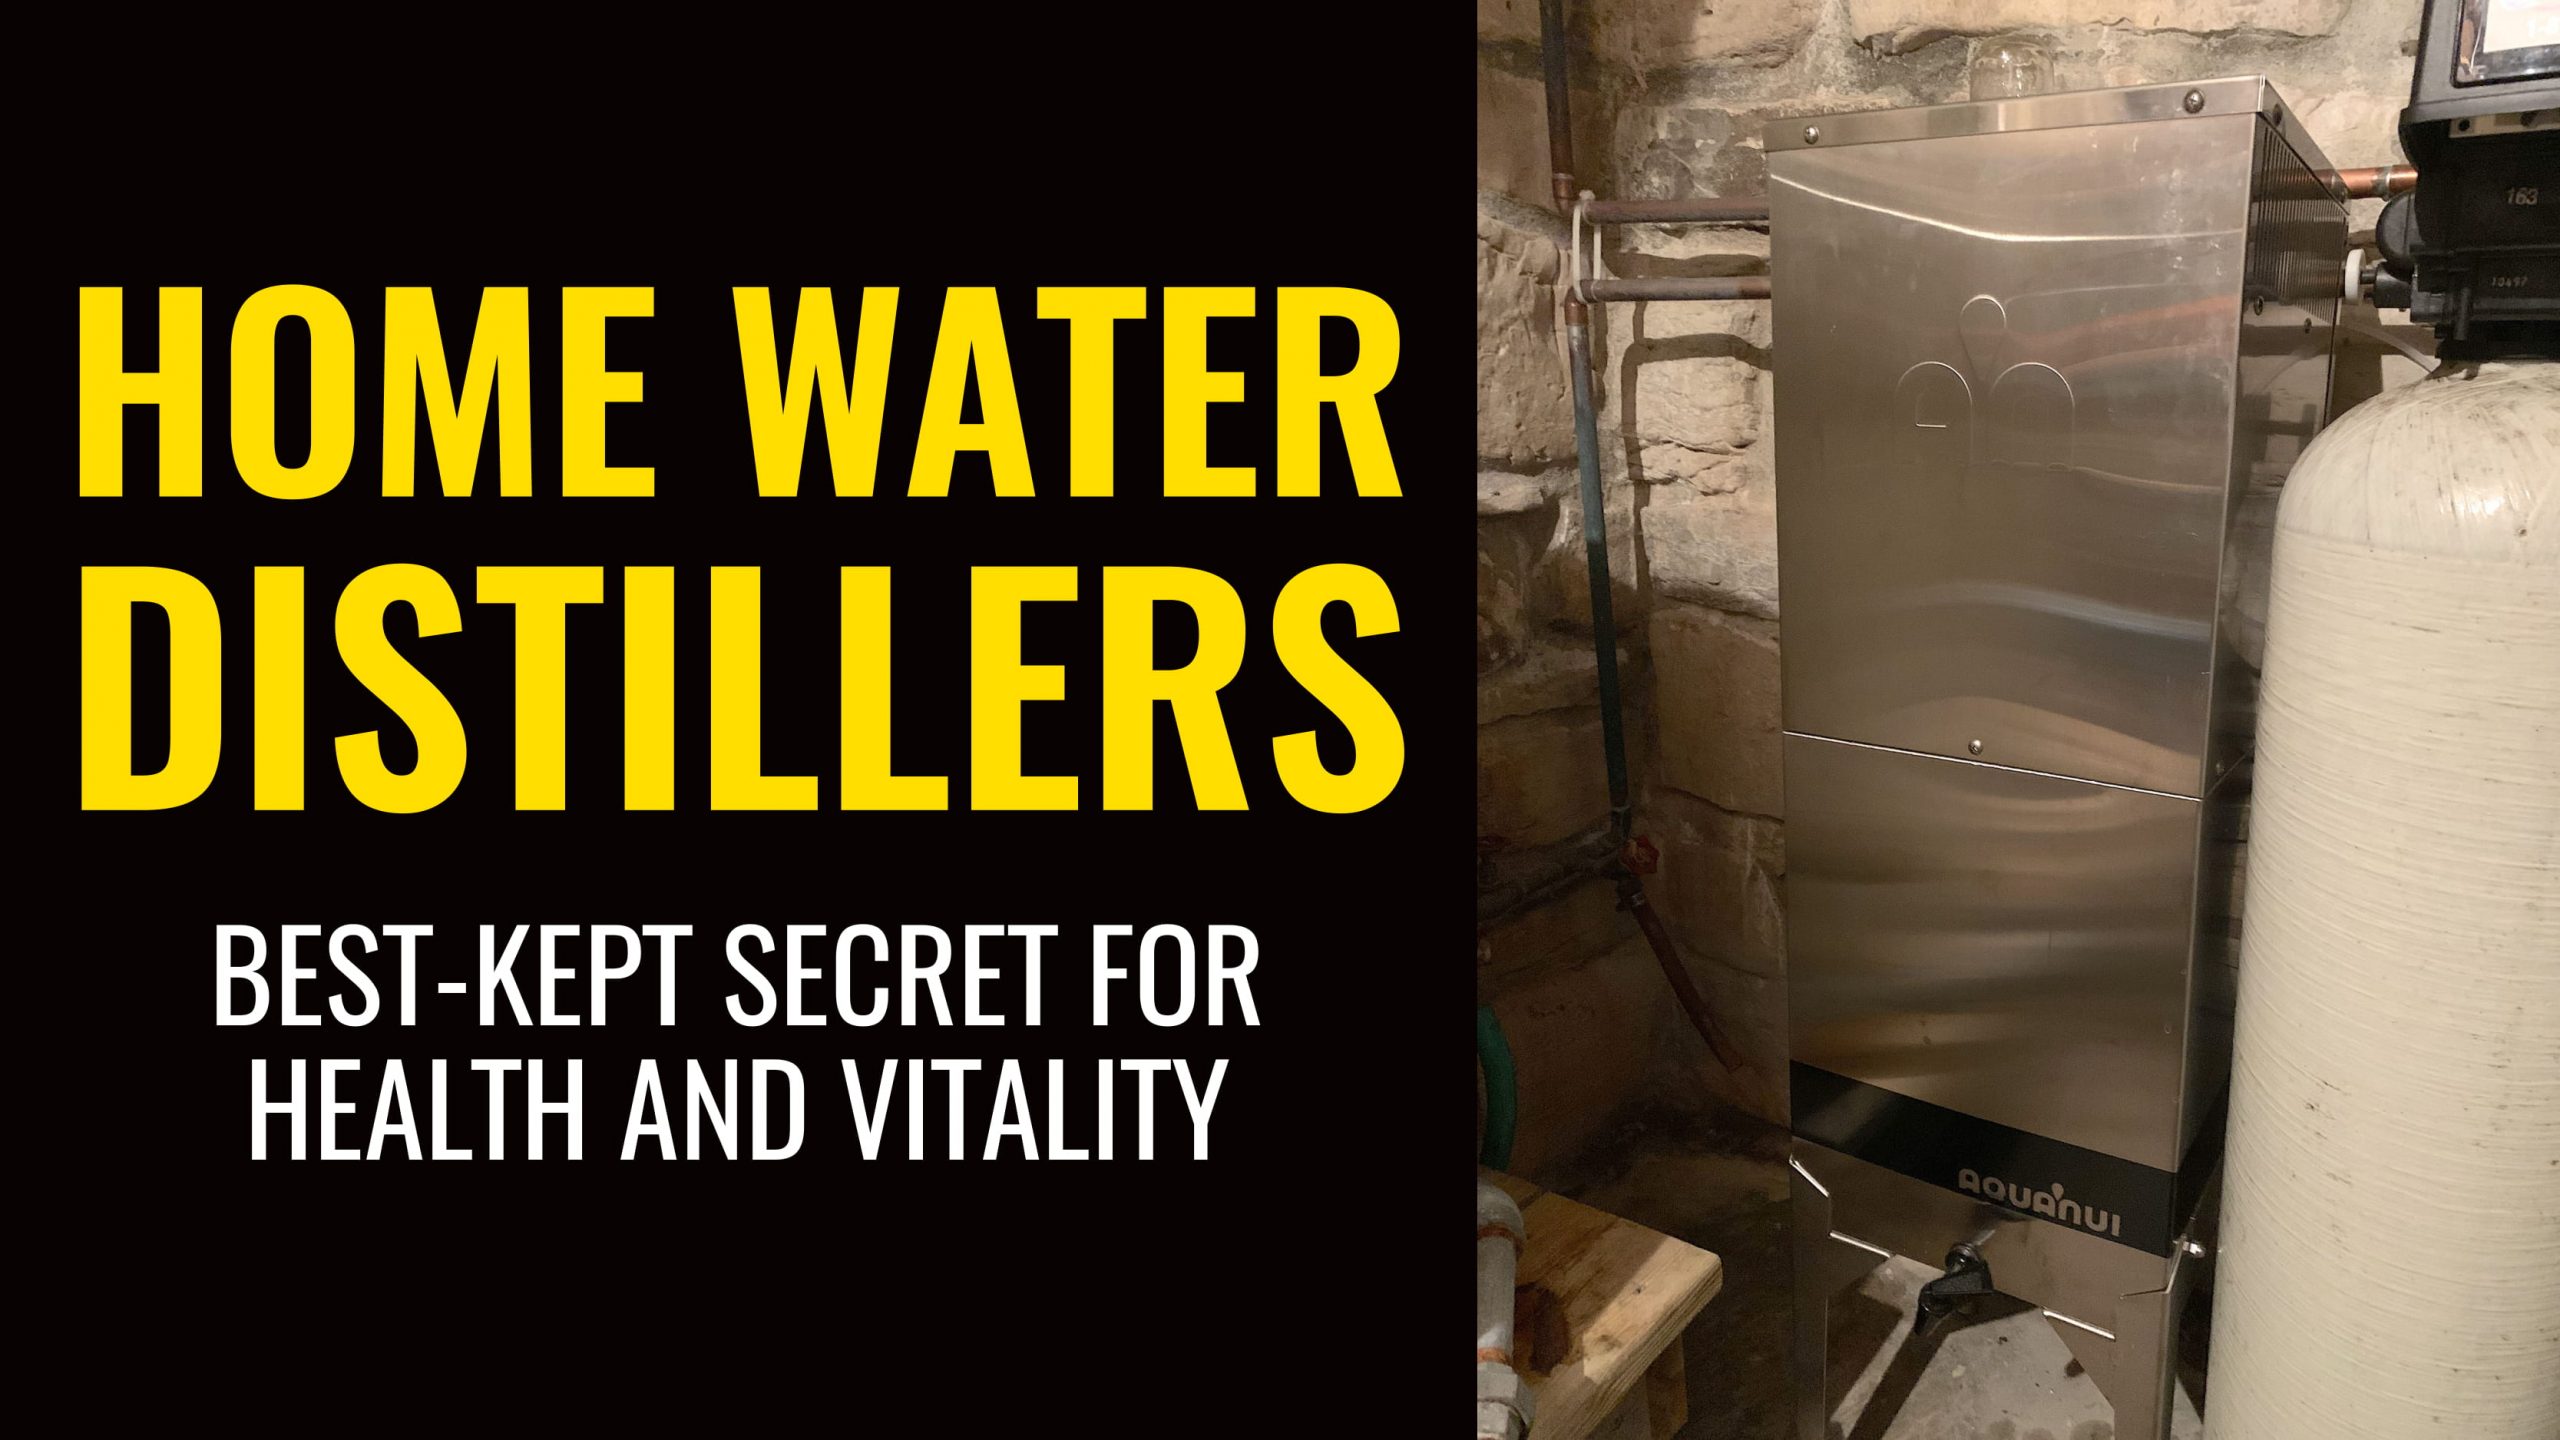 Distilled Water FAQ - AquaNui Home Water Distillers